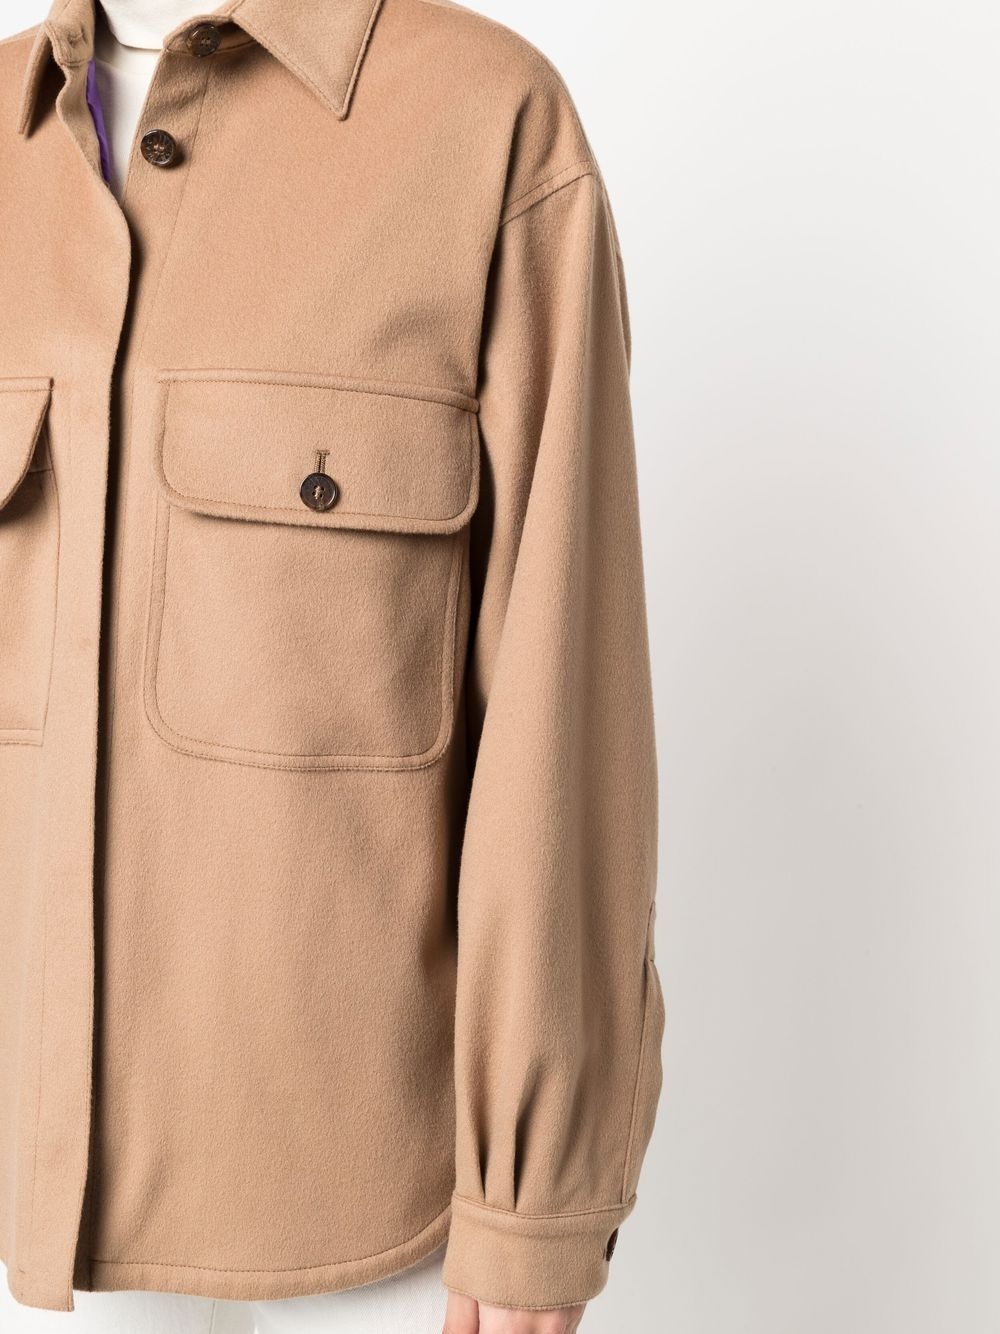 LORRIANE Light Camel Cotton Overshirt Jacket - 5